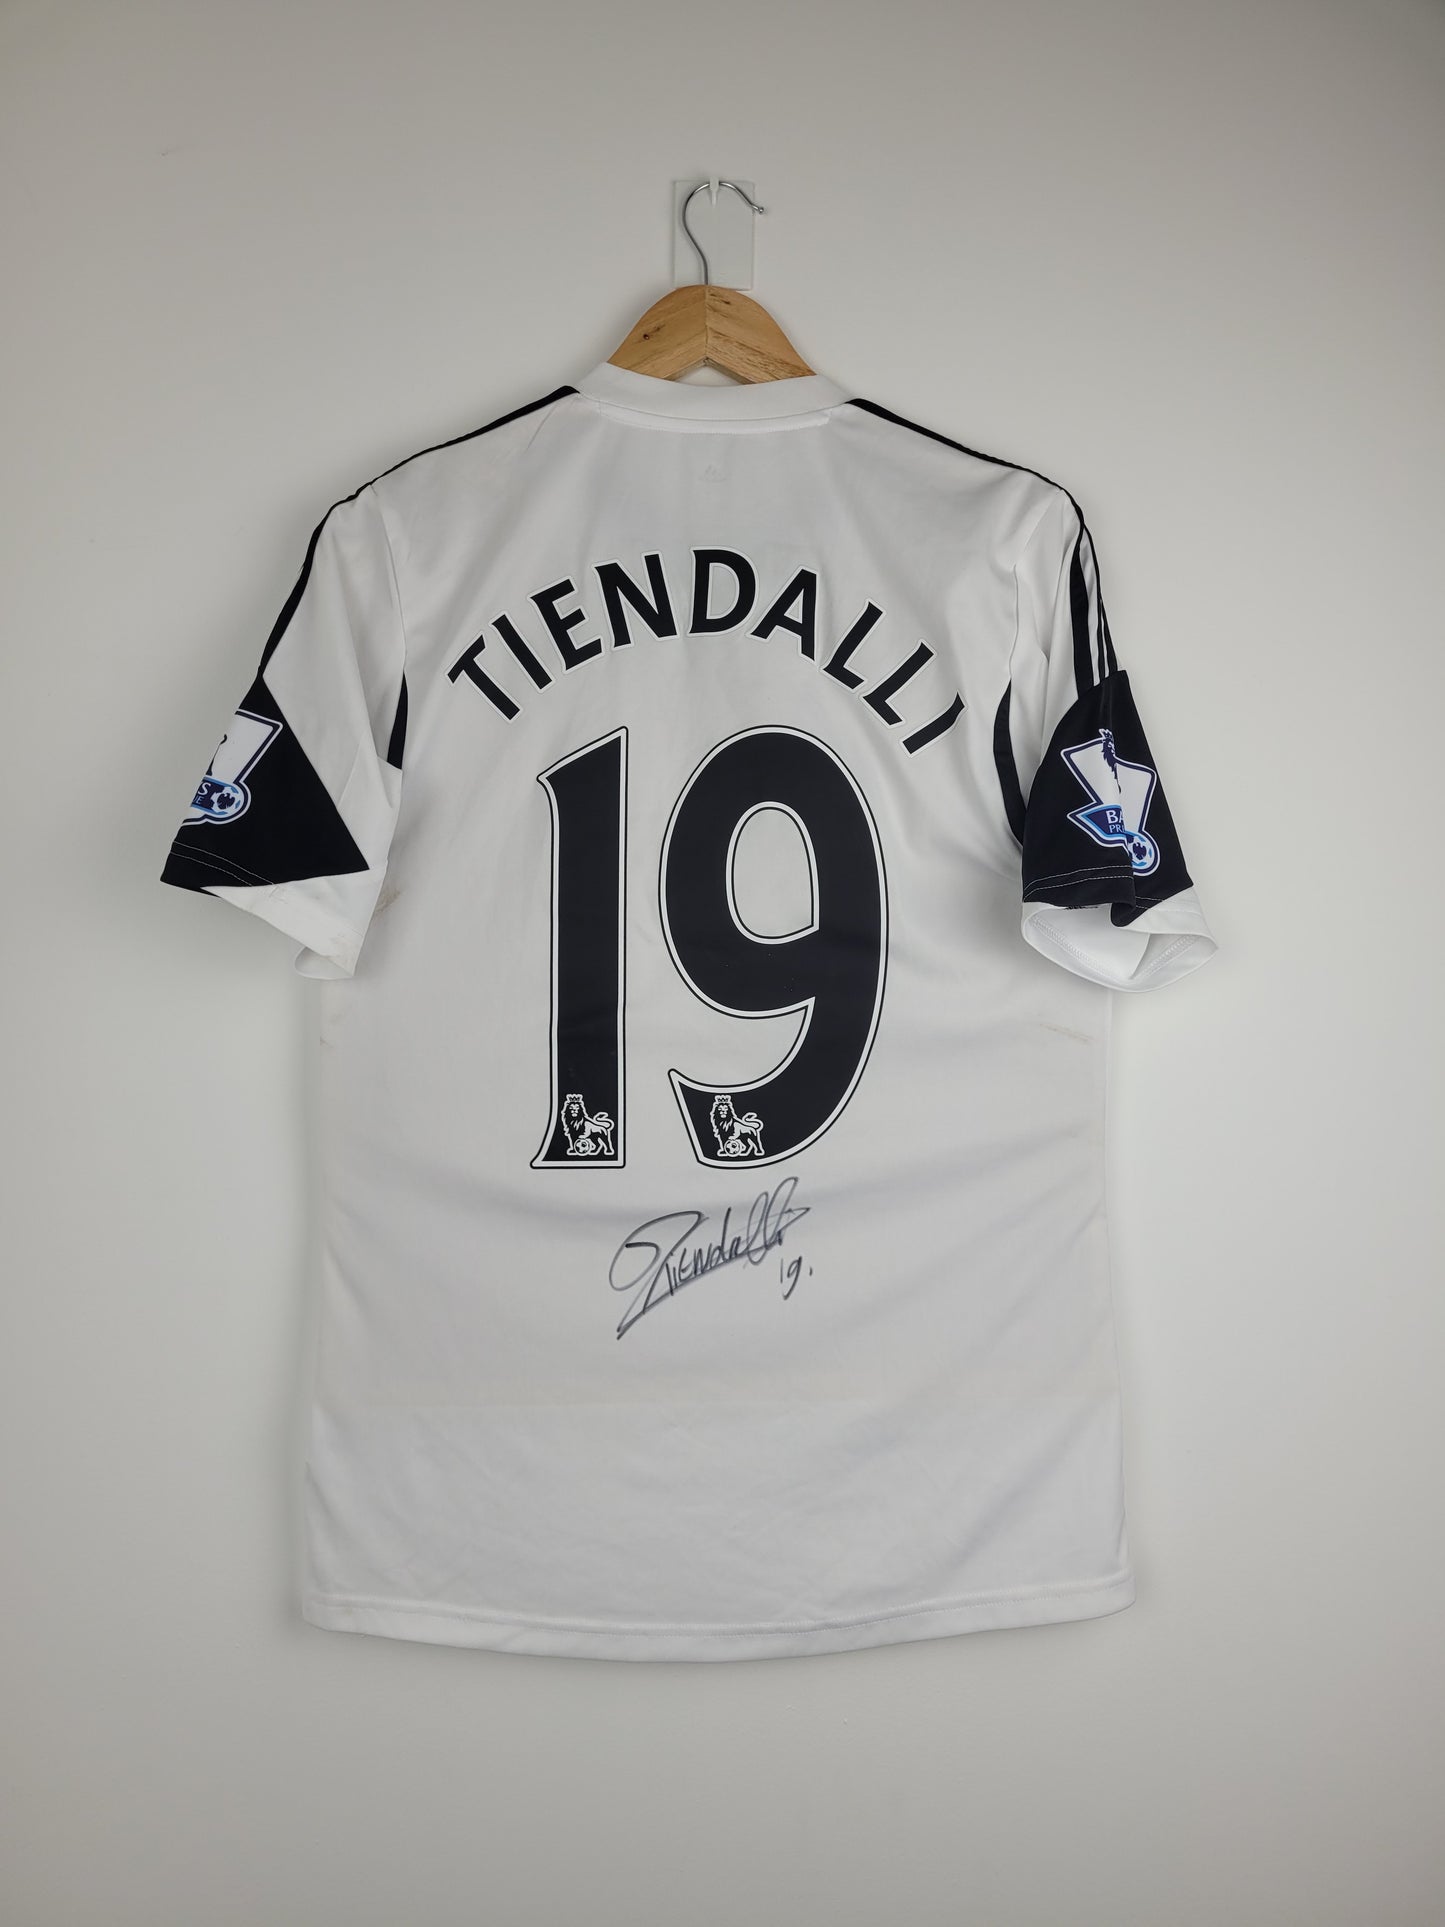 
                  
                    Original Swansea City AFC *Matchworn & Signed* Home Jersey #19 Tiendalli 2013-2014 - S
                  
                